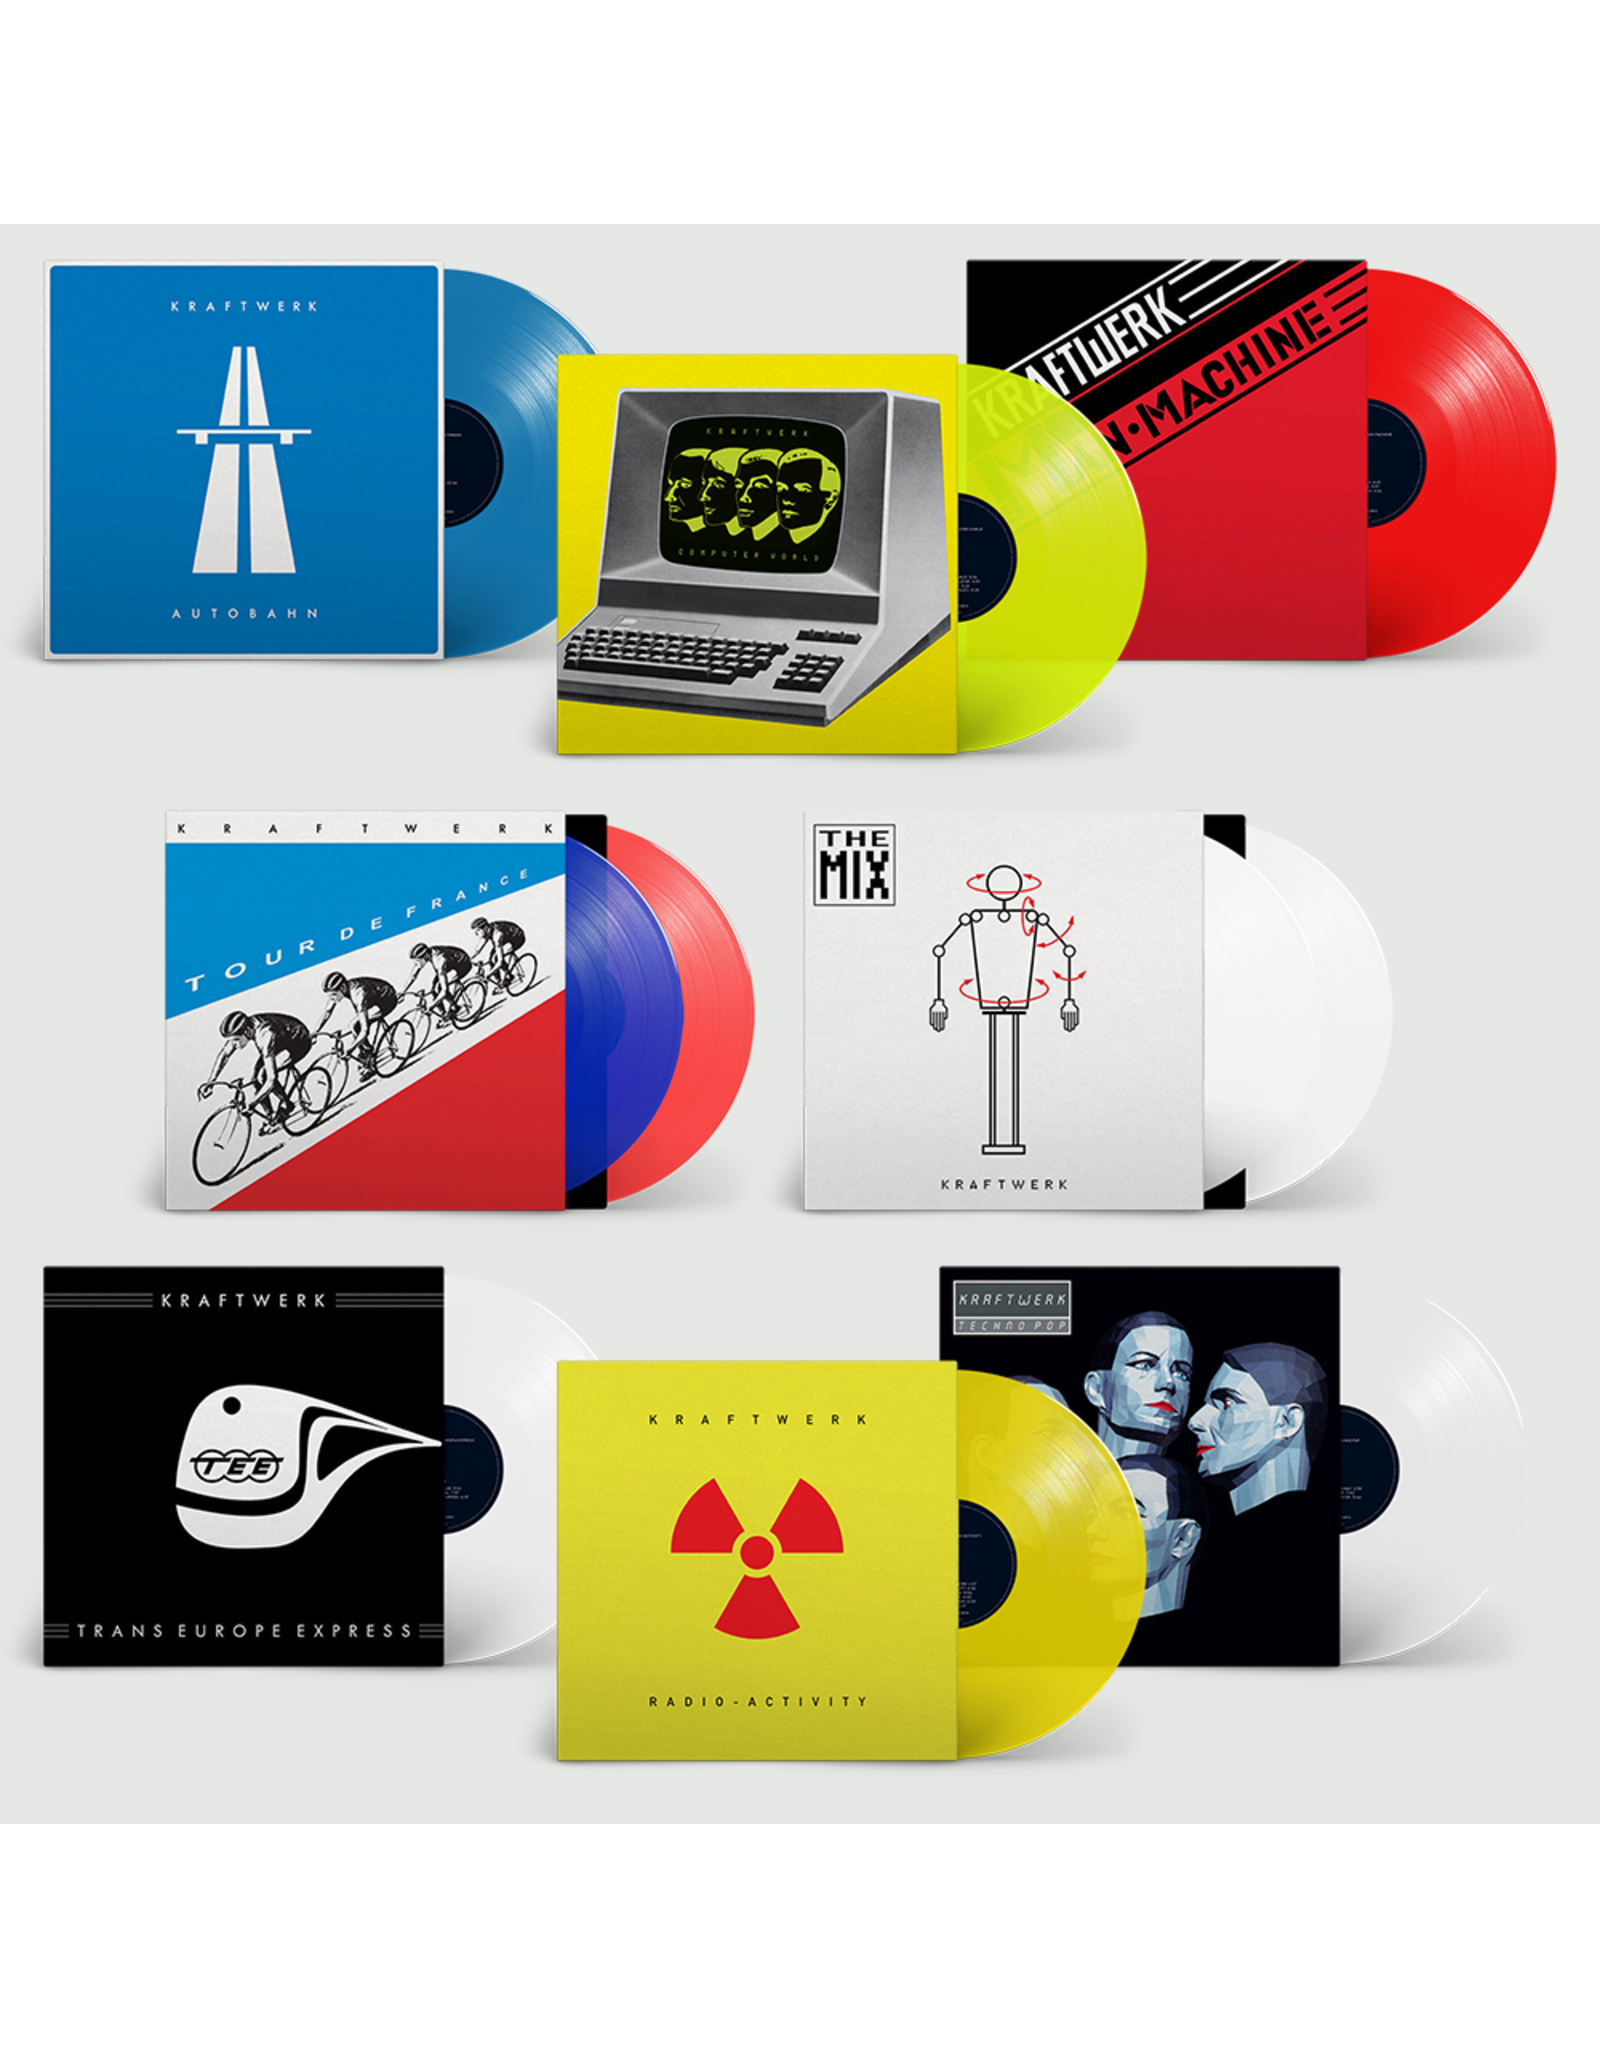 Kraftwerk - Computer World (Yellow Vinyl)